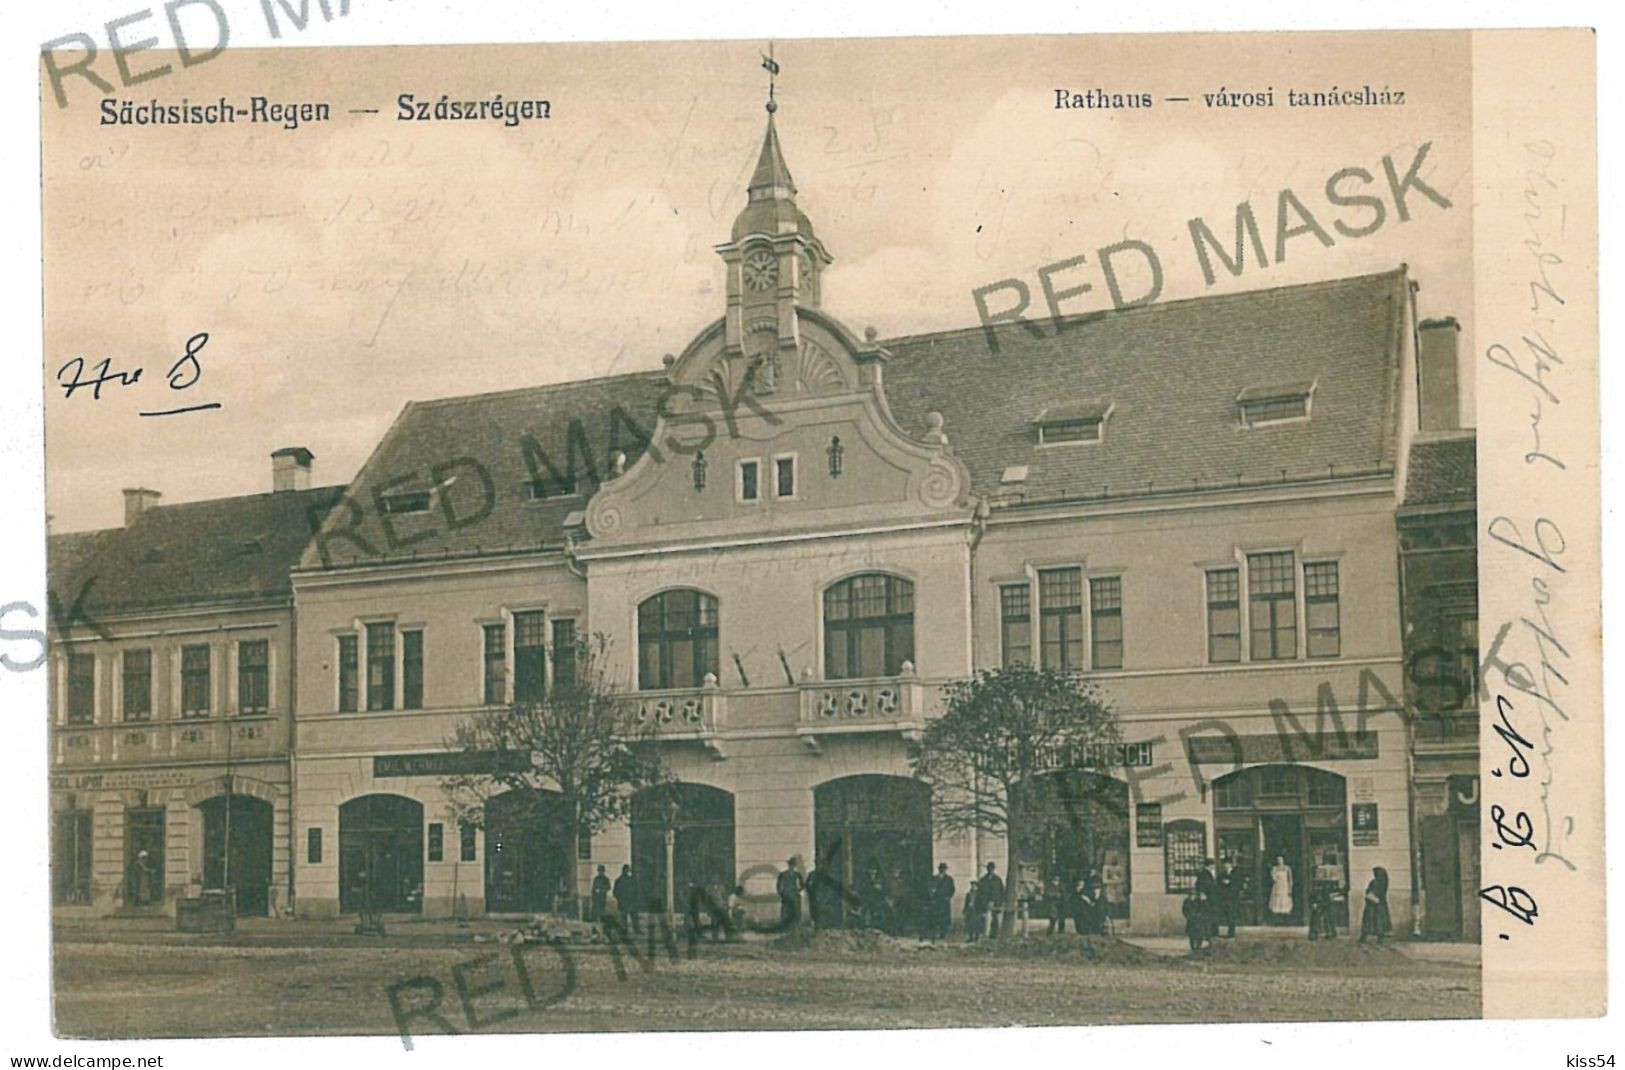 RO 86 - 10838 REGHIN, Mures, Romania - Old Postcard - Unused - 1911 - Roumanie